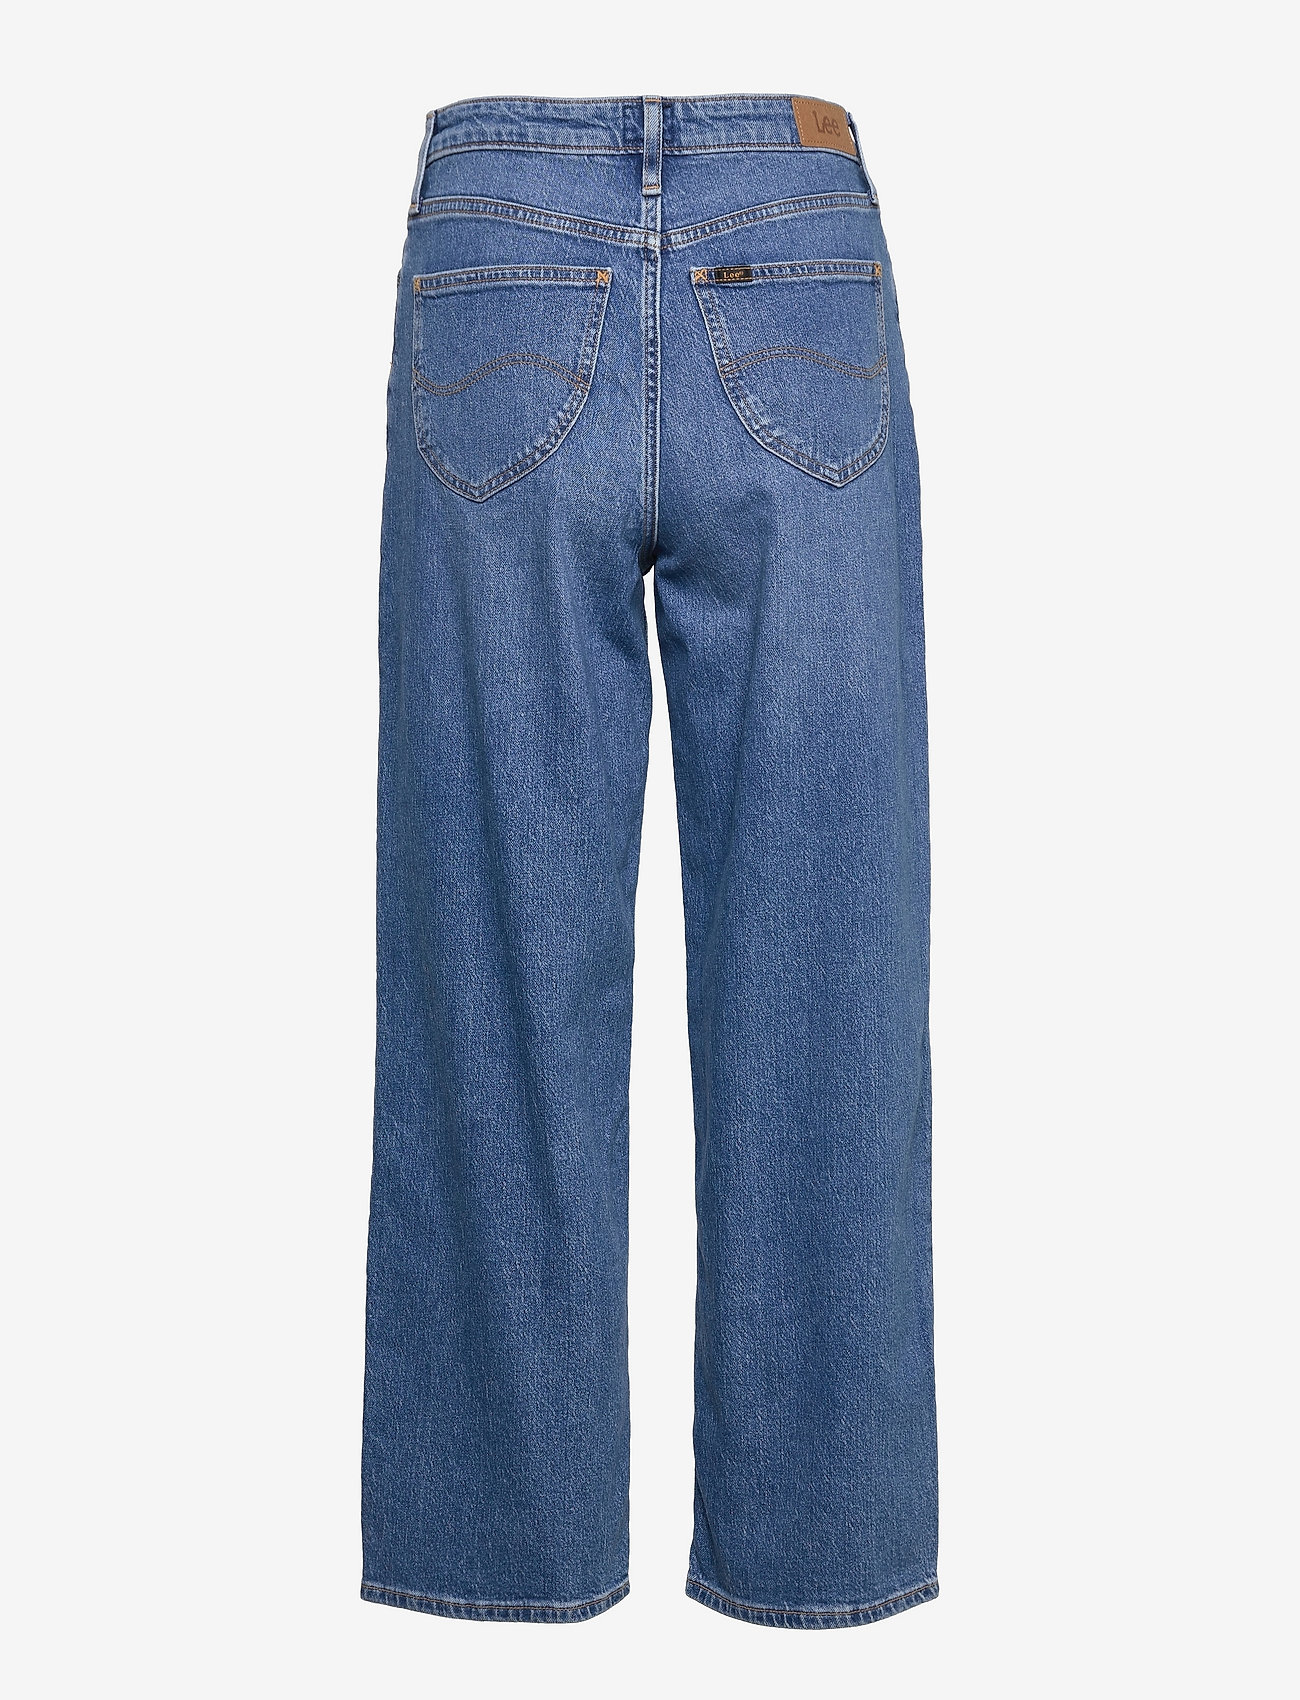 Lee Jeans - WIDE LEG LONG - spodnie szerokie - used alton - 1